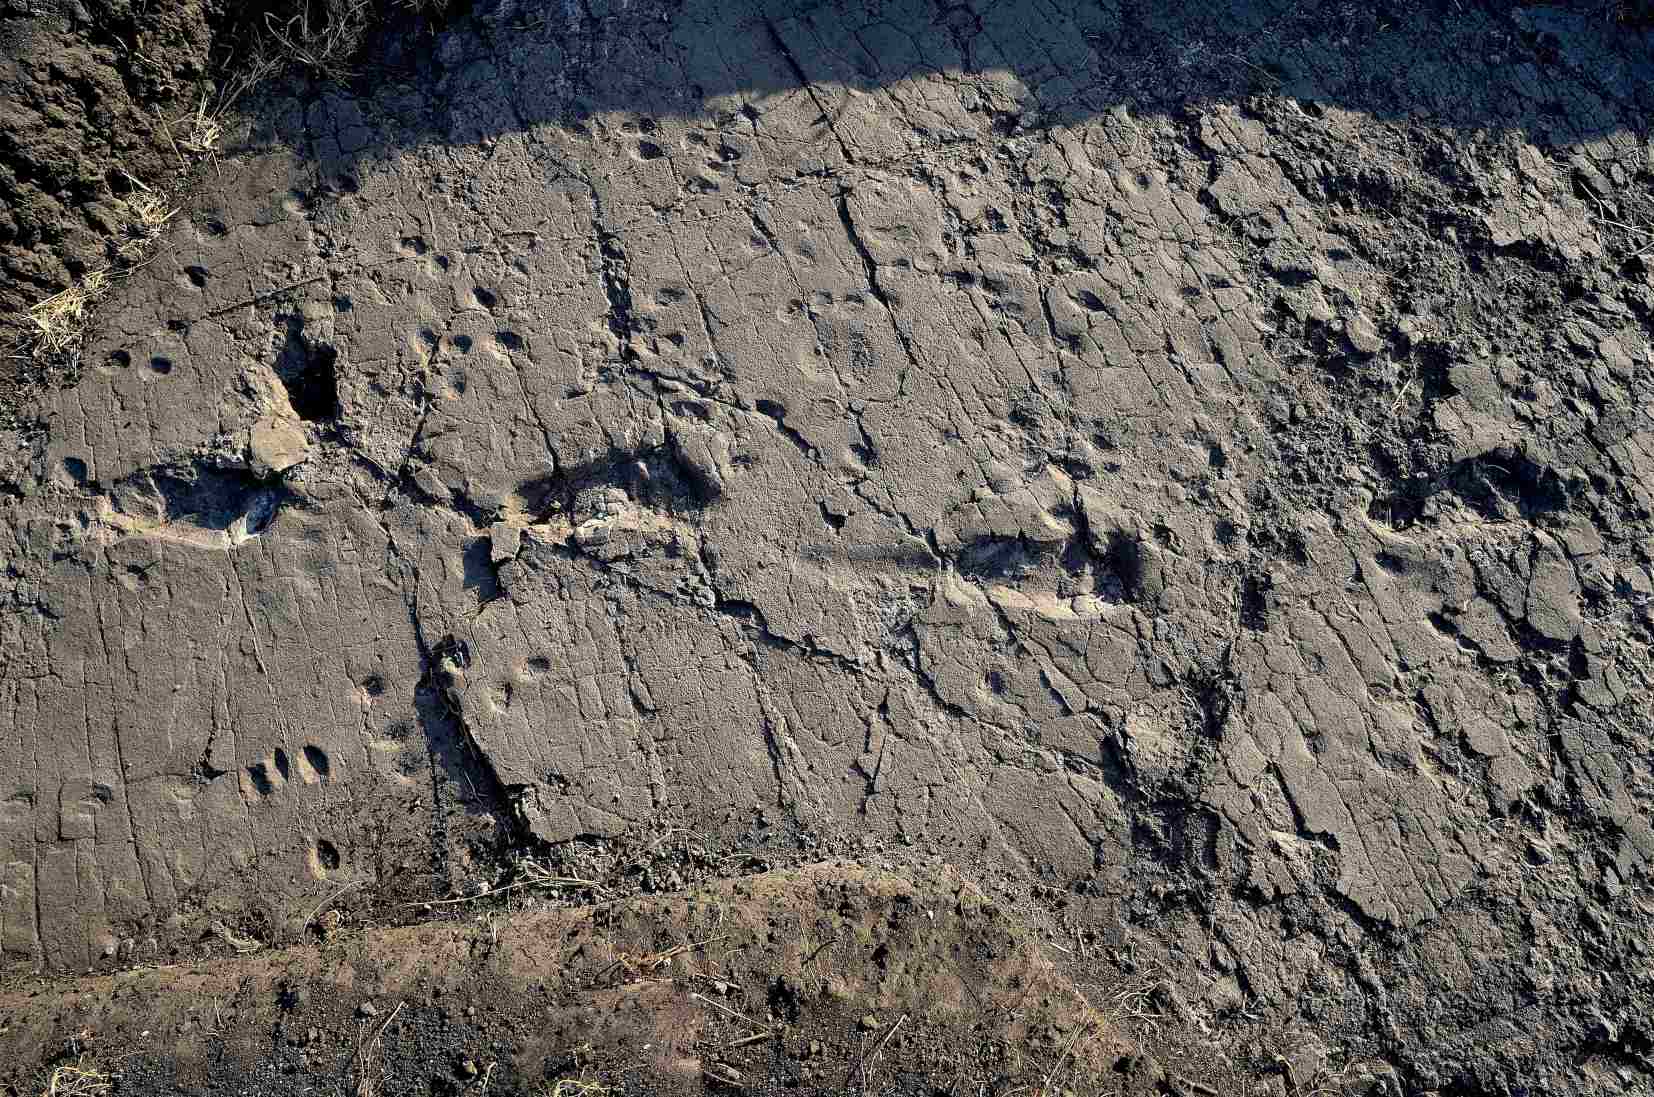 Laetoli Footprints